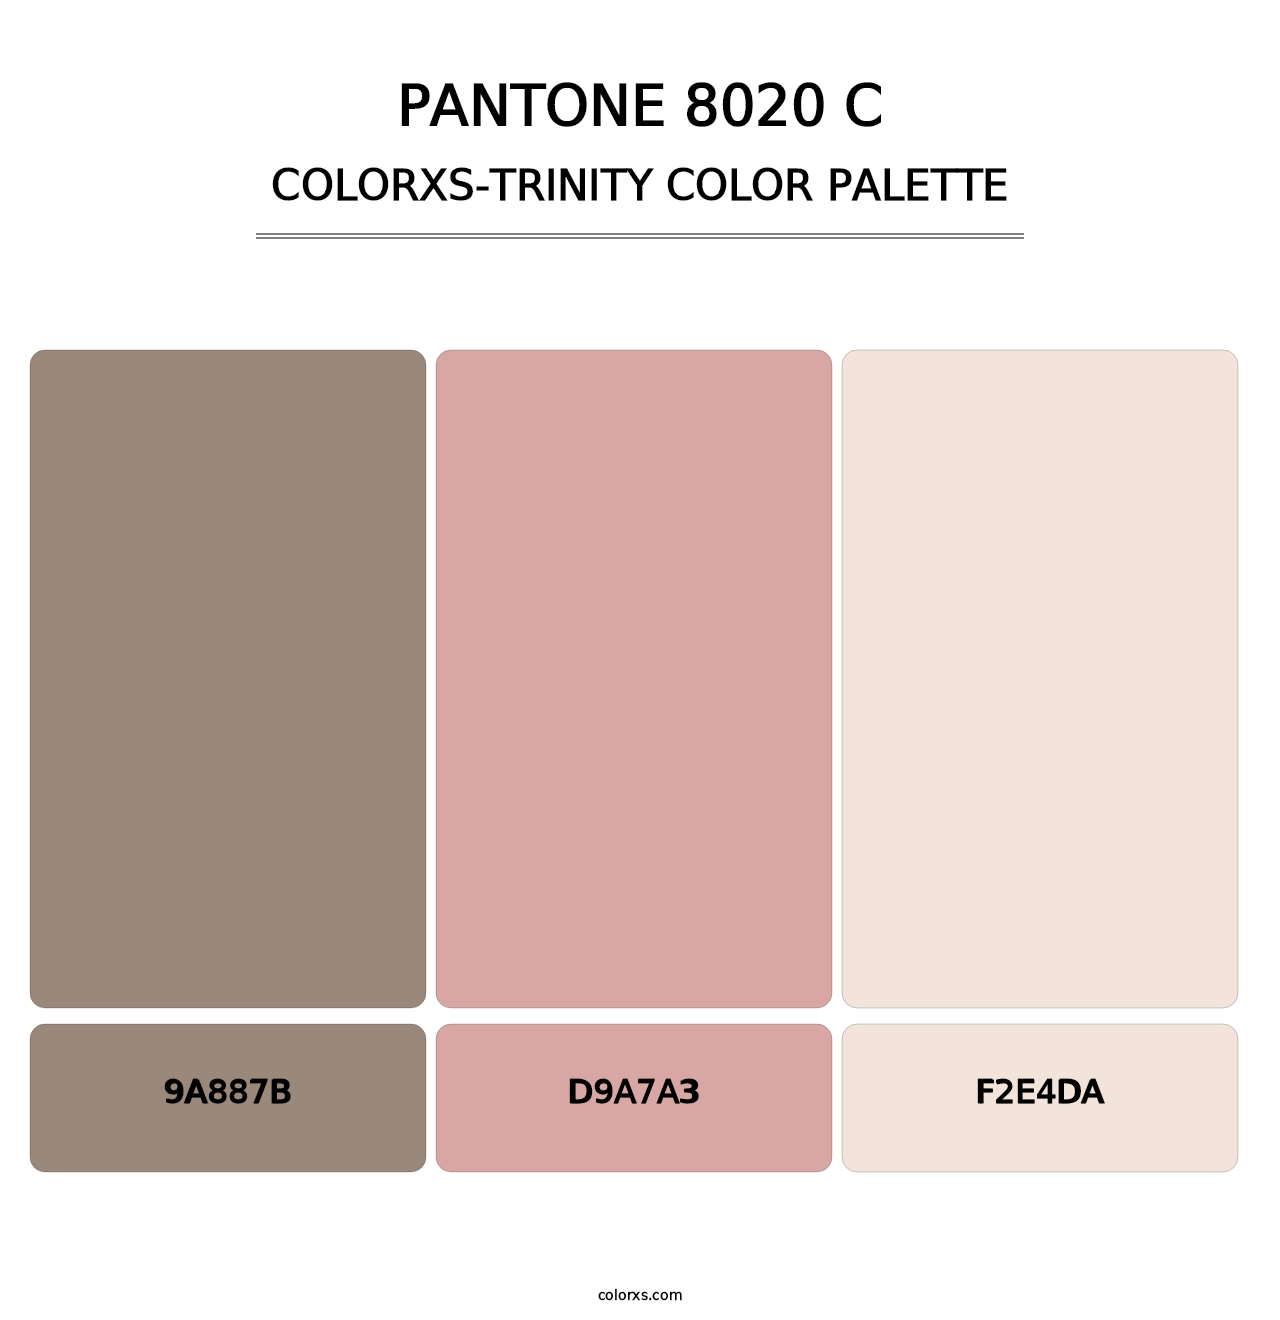 PANTONE 8020 C - Colorxs Trinity Palette